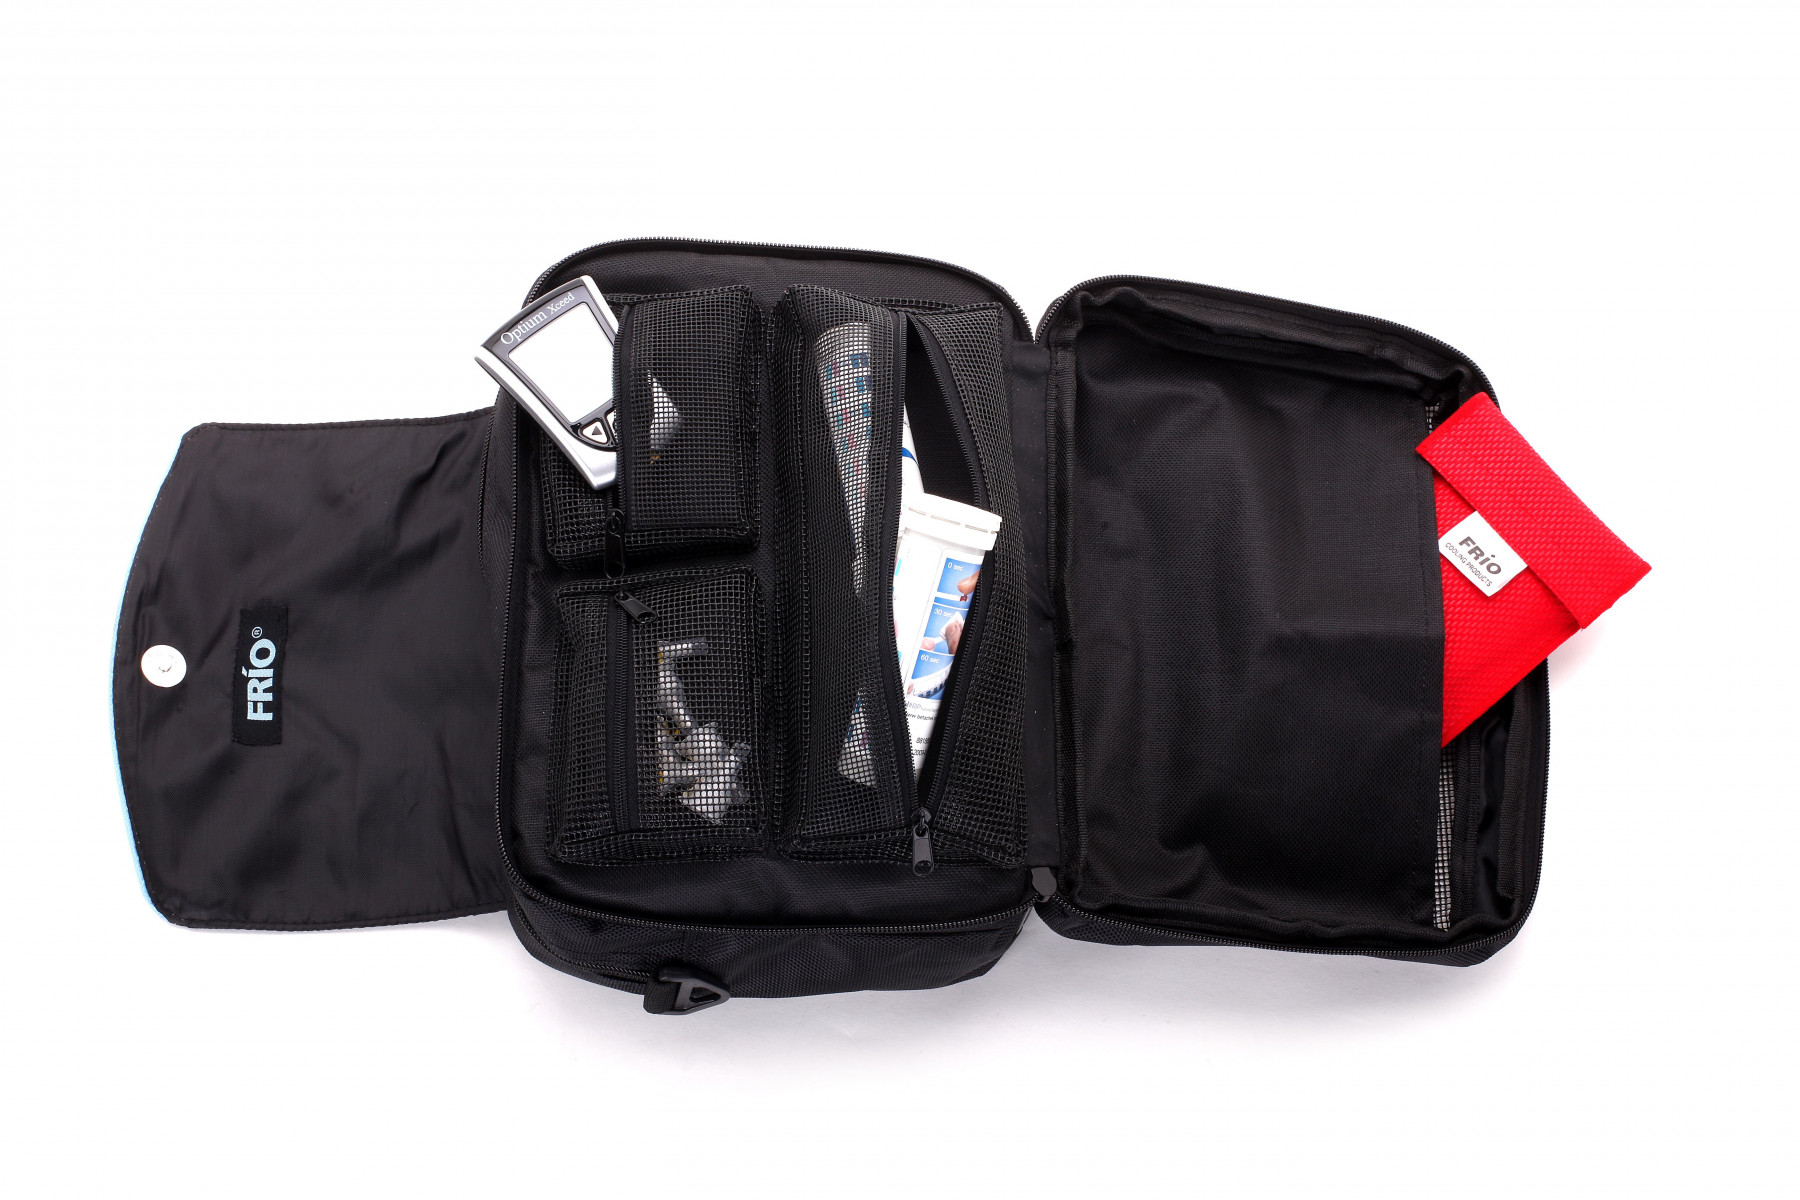 Frio Vitesse Travel Case and Bag